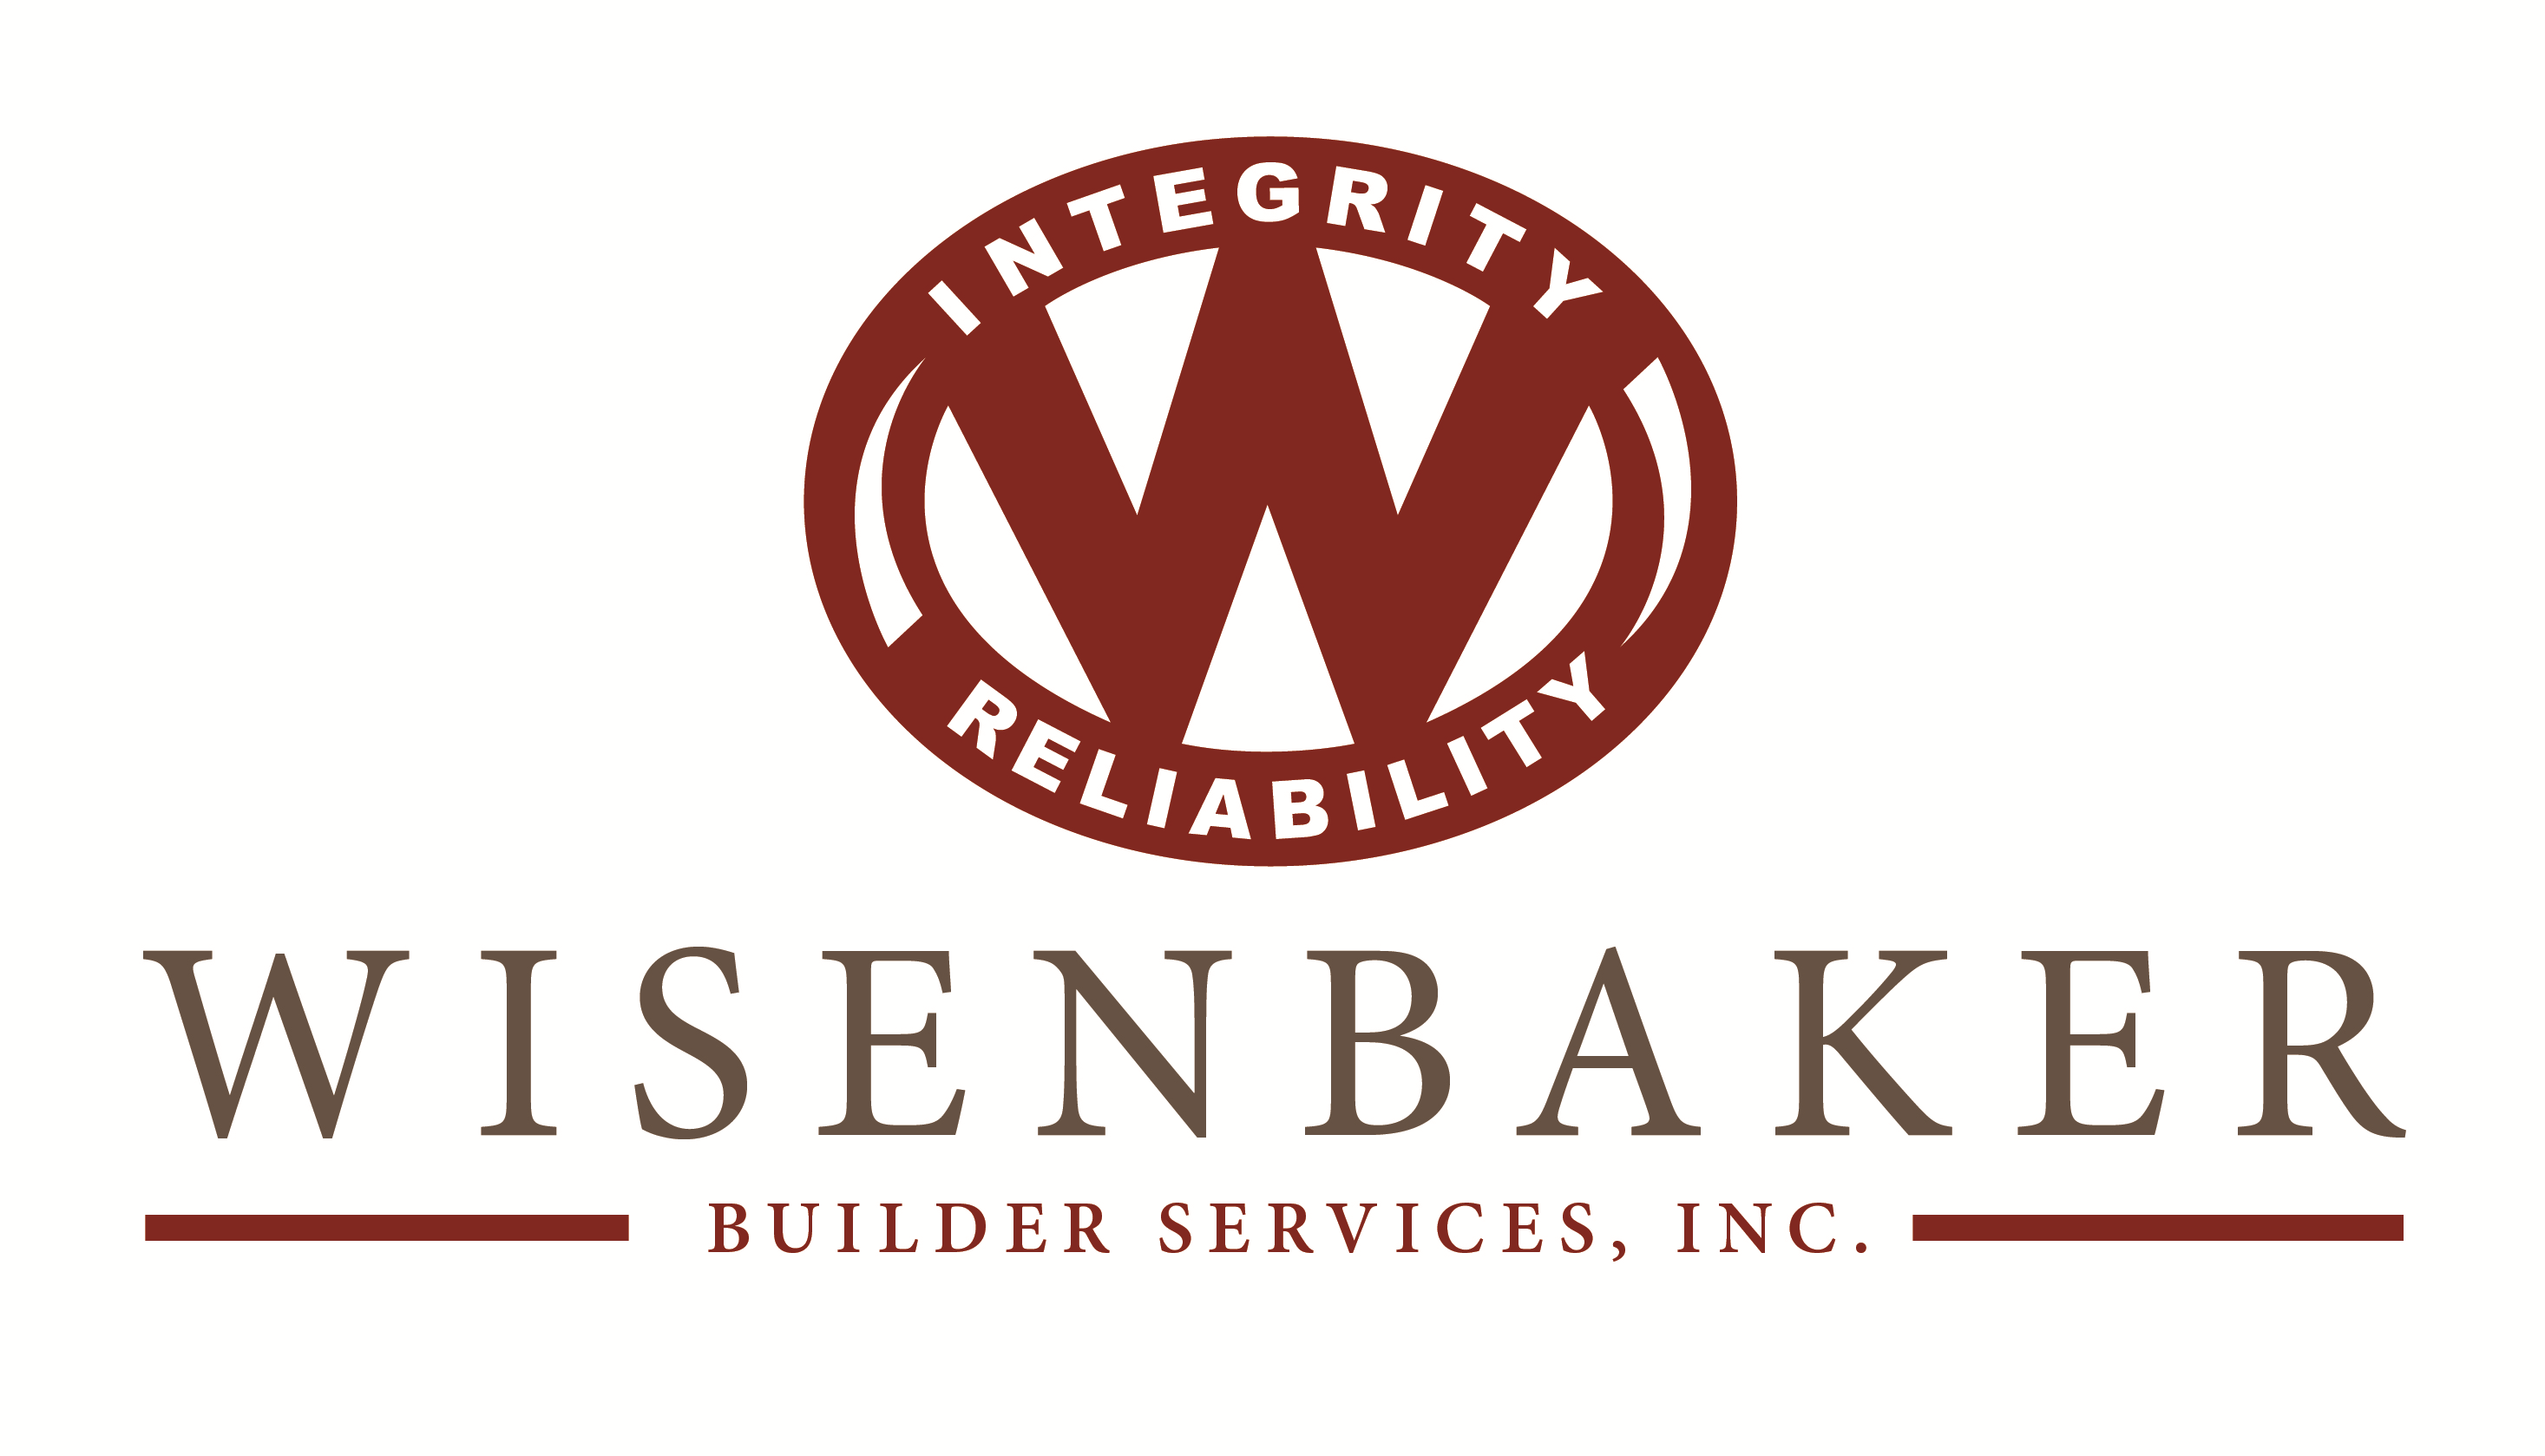 Wisenbaker Builder Services Company Logo